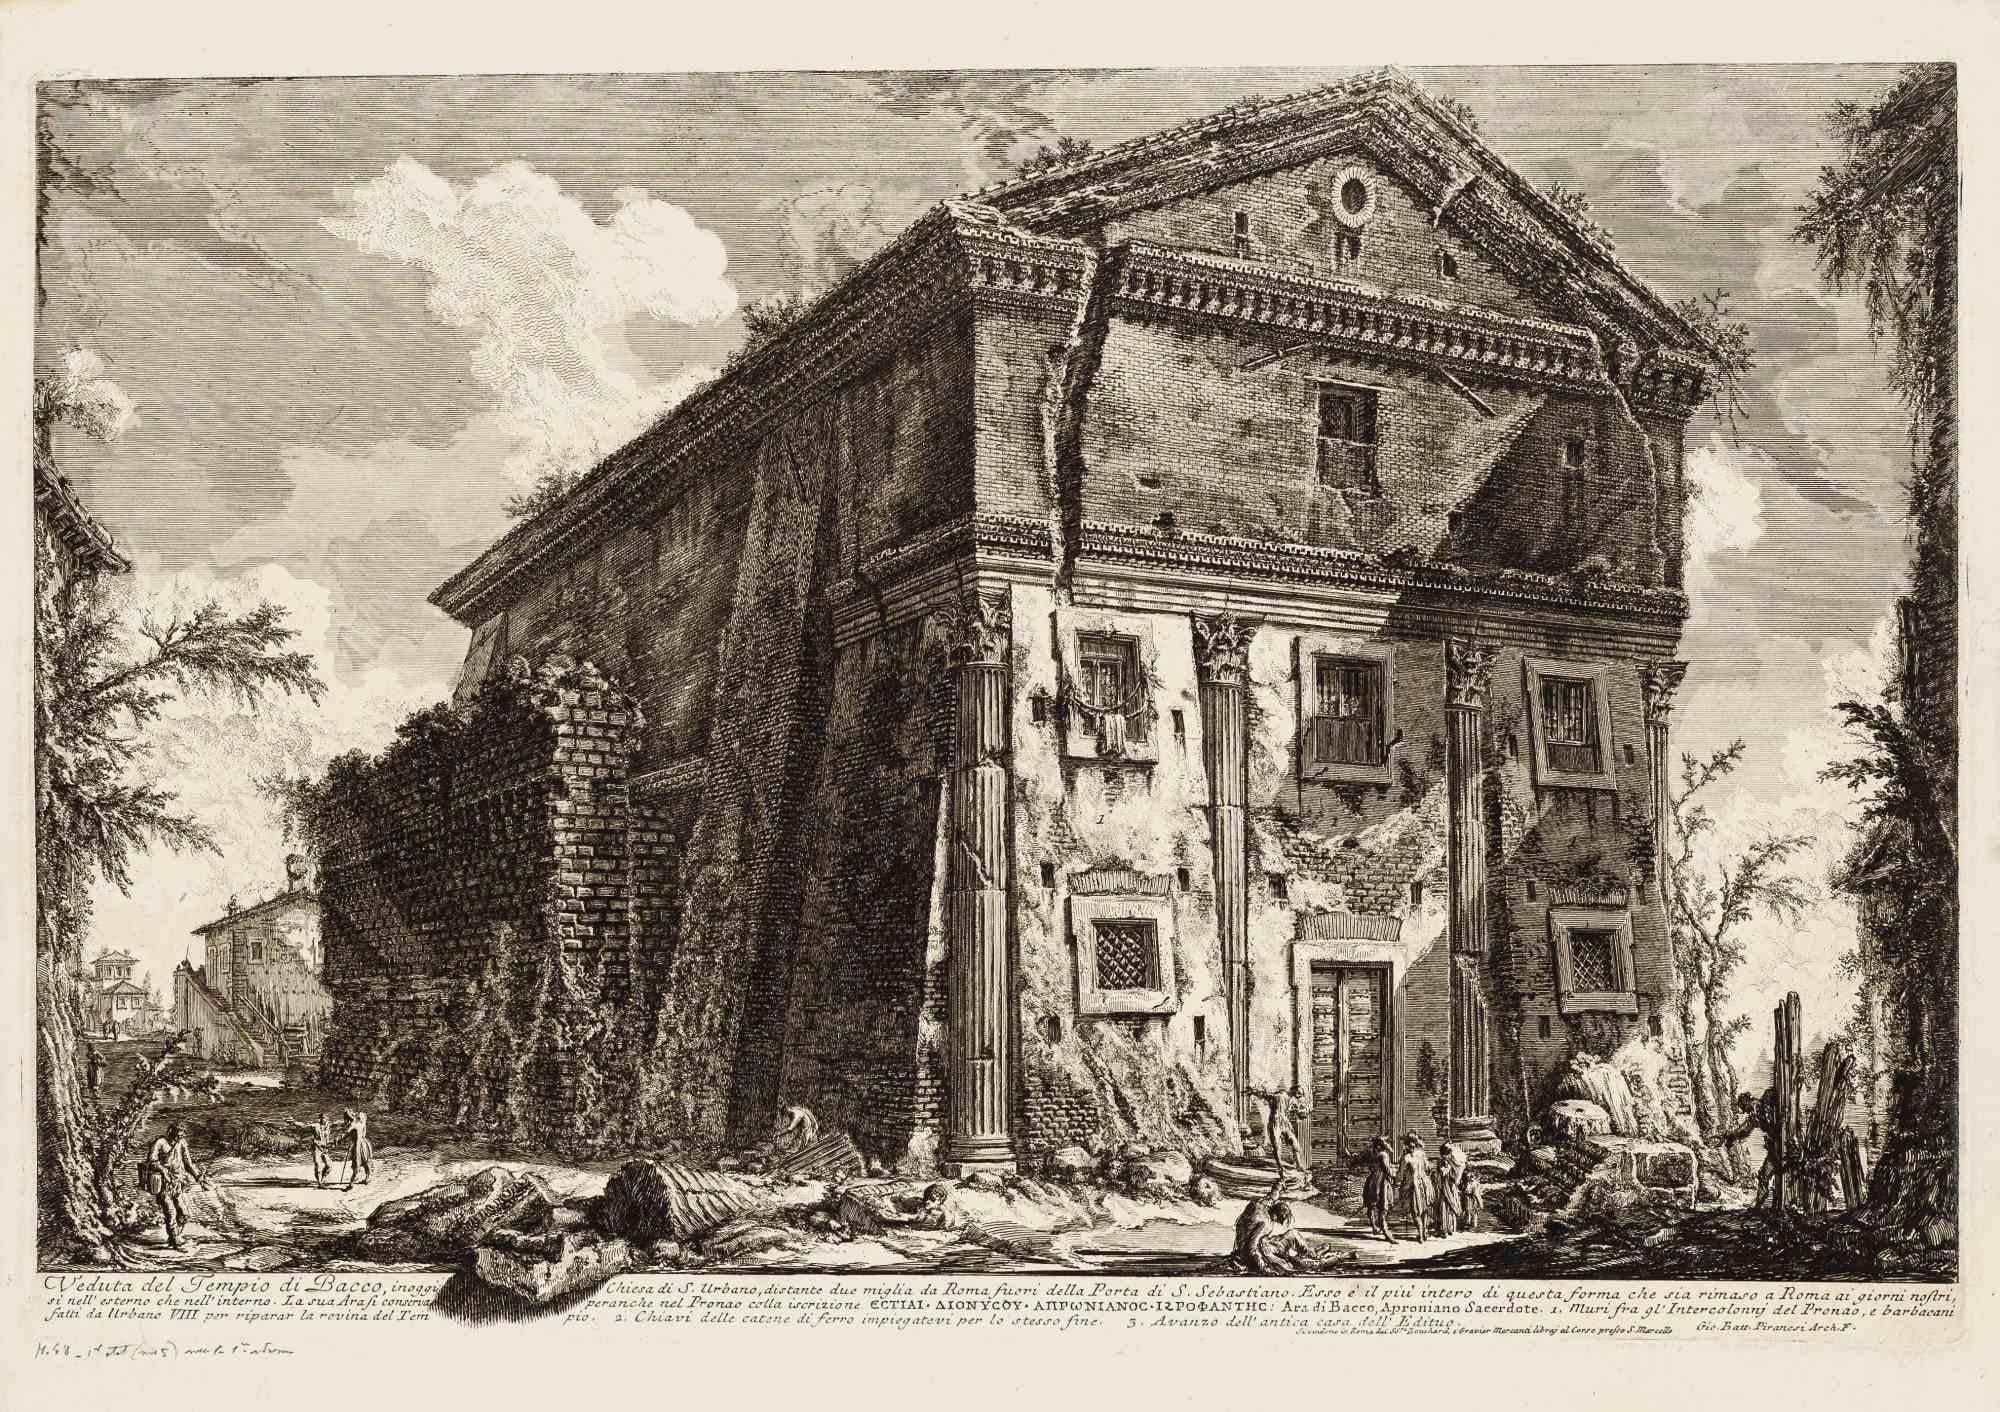 Giovanni Battista Piranesi Landscape Print - View of the Temple of Bacchus - Original Etching by Piranesi - 1758